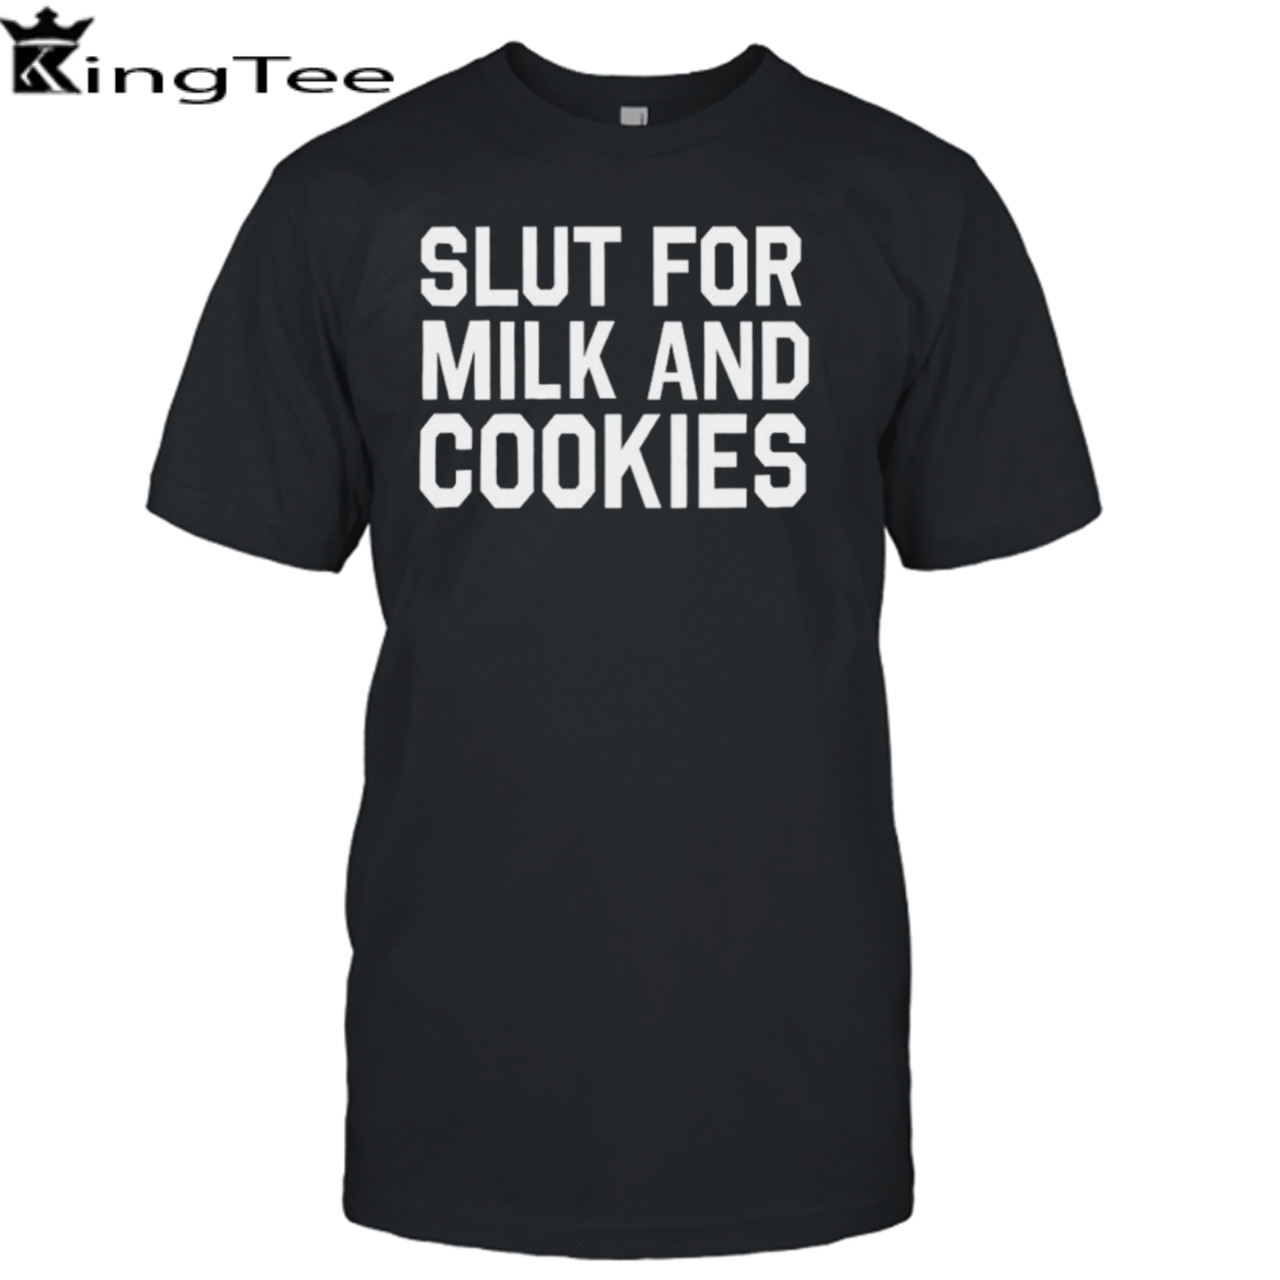 Slut for milk and cookies shirt